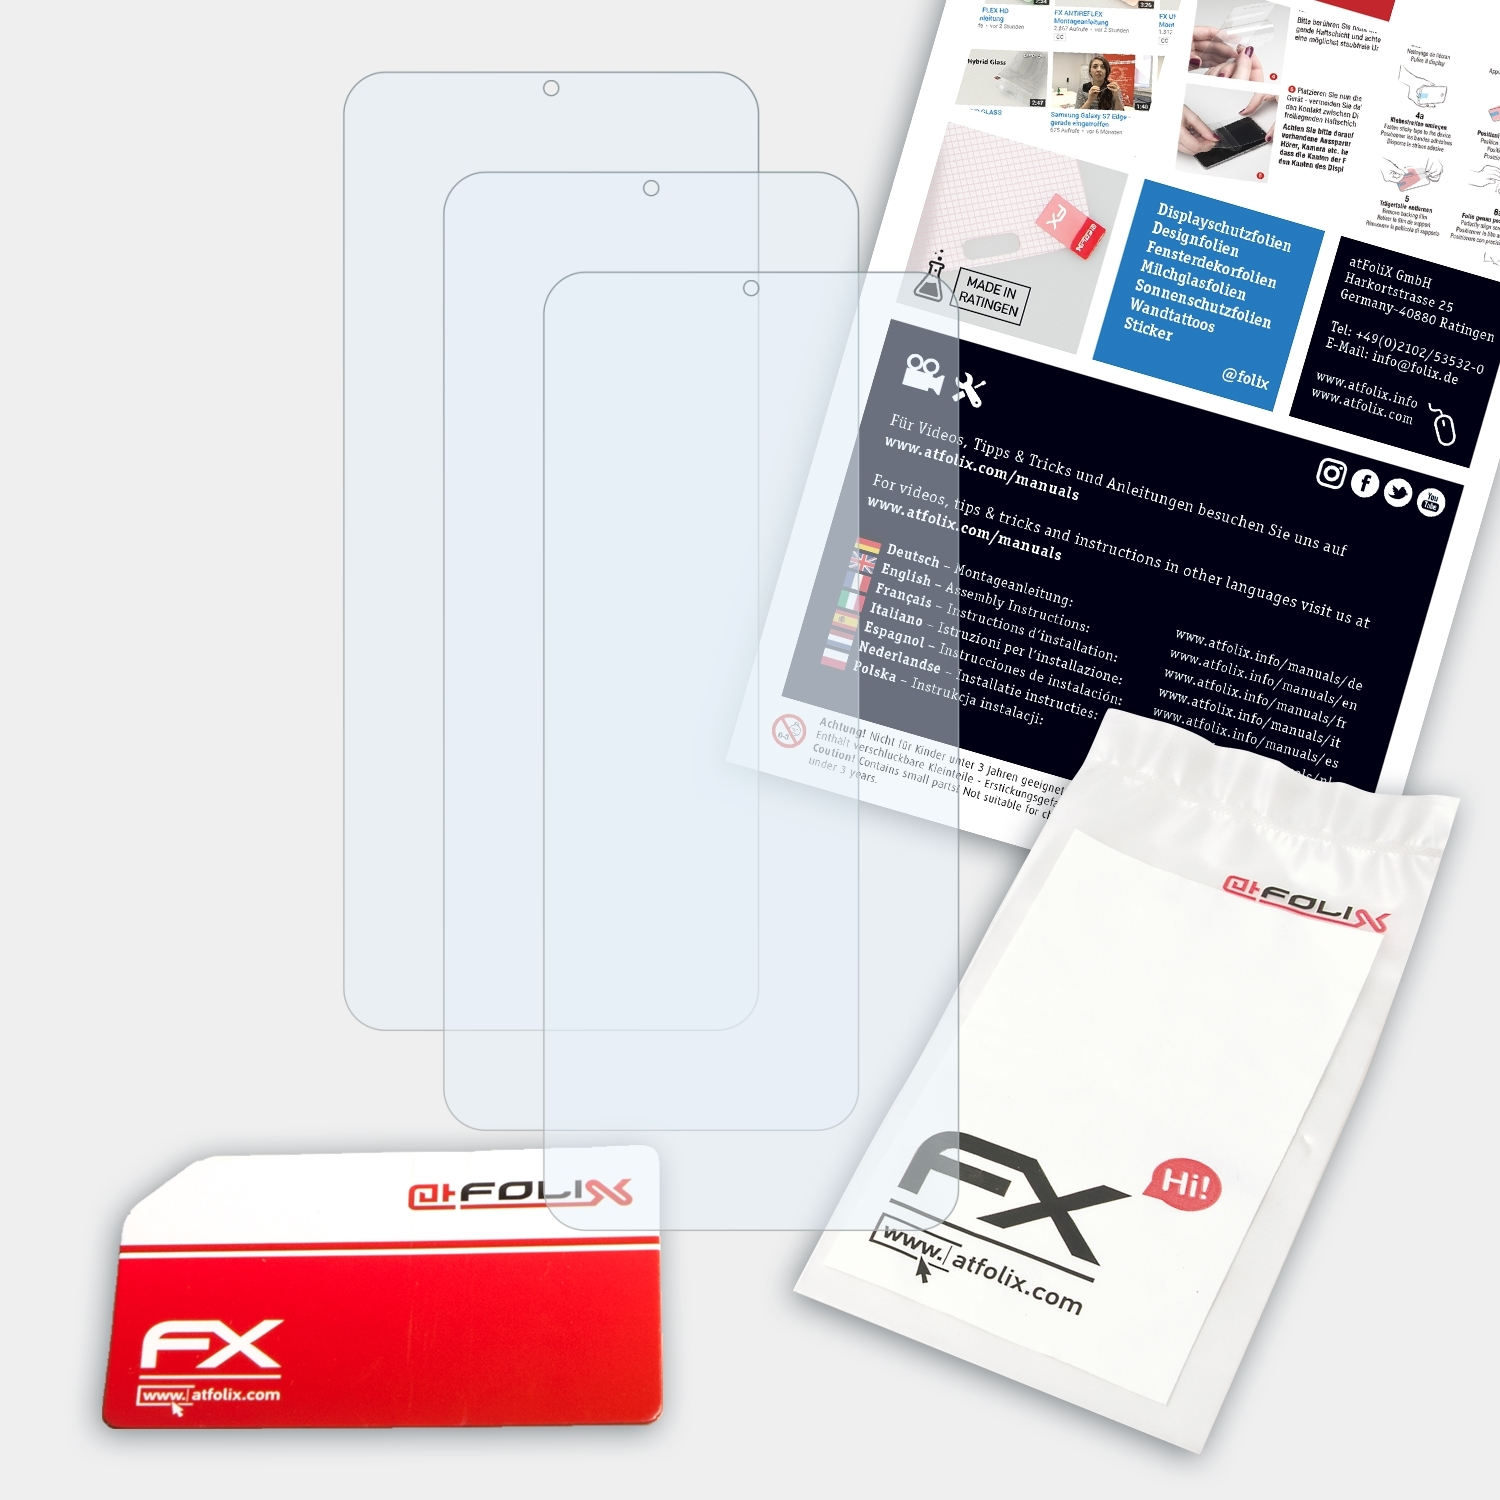 ATFOLIX 3x FX-Clear 6) Infinix Displayschutz(für Smart